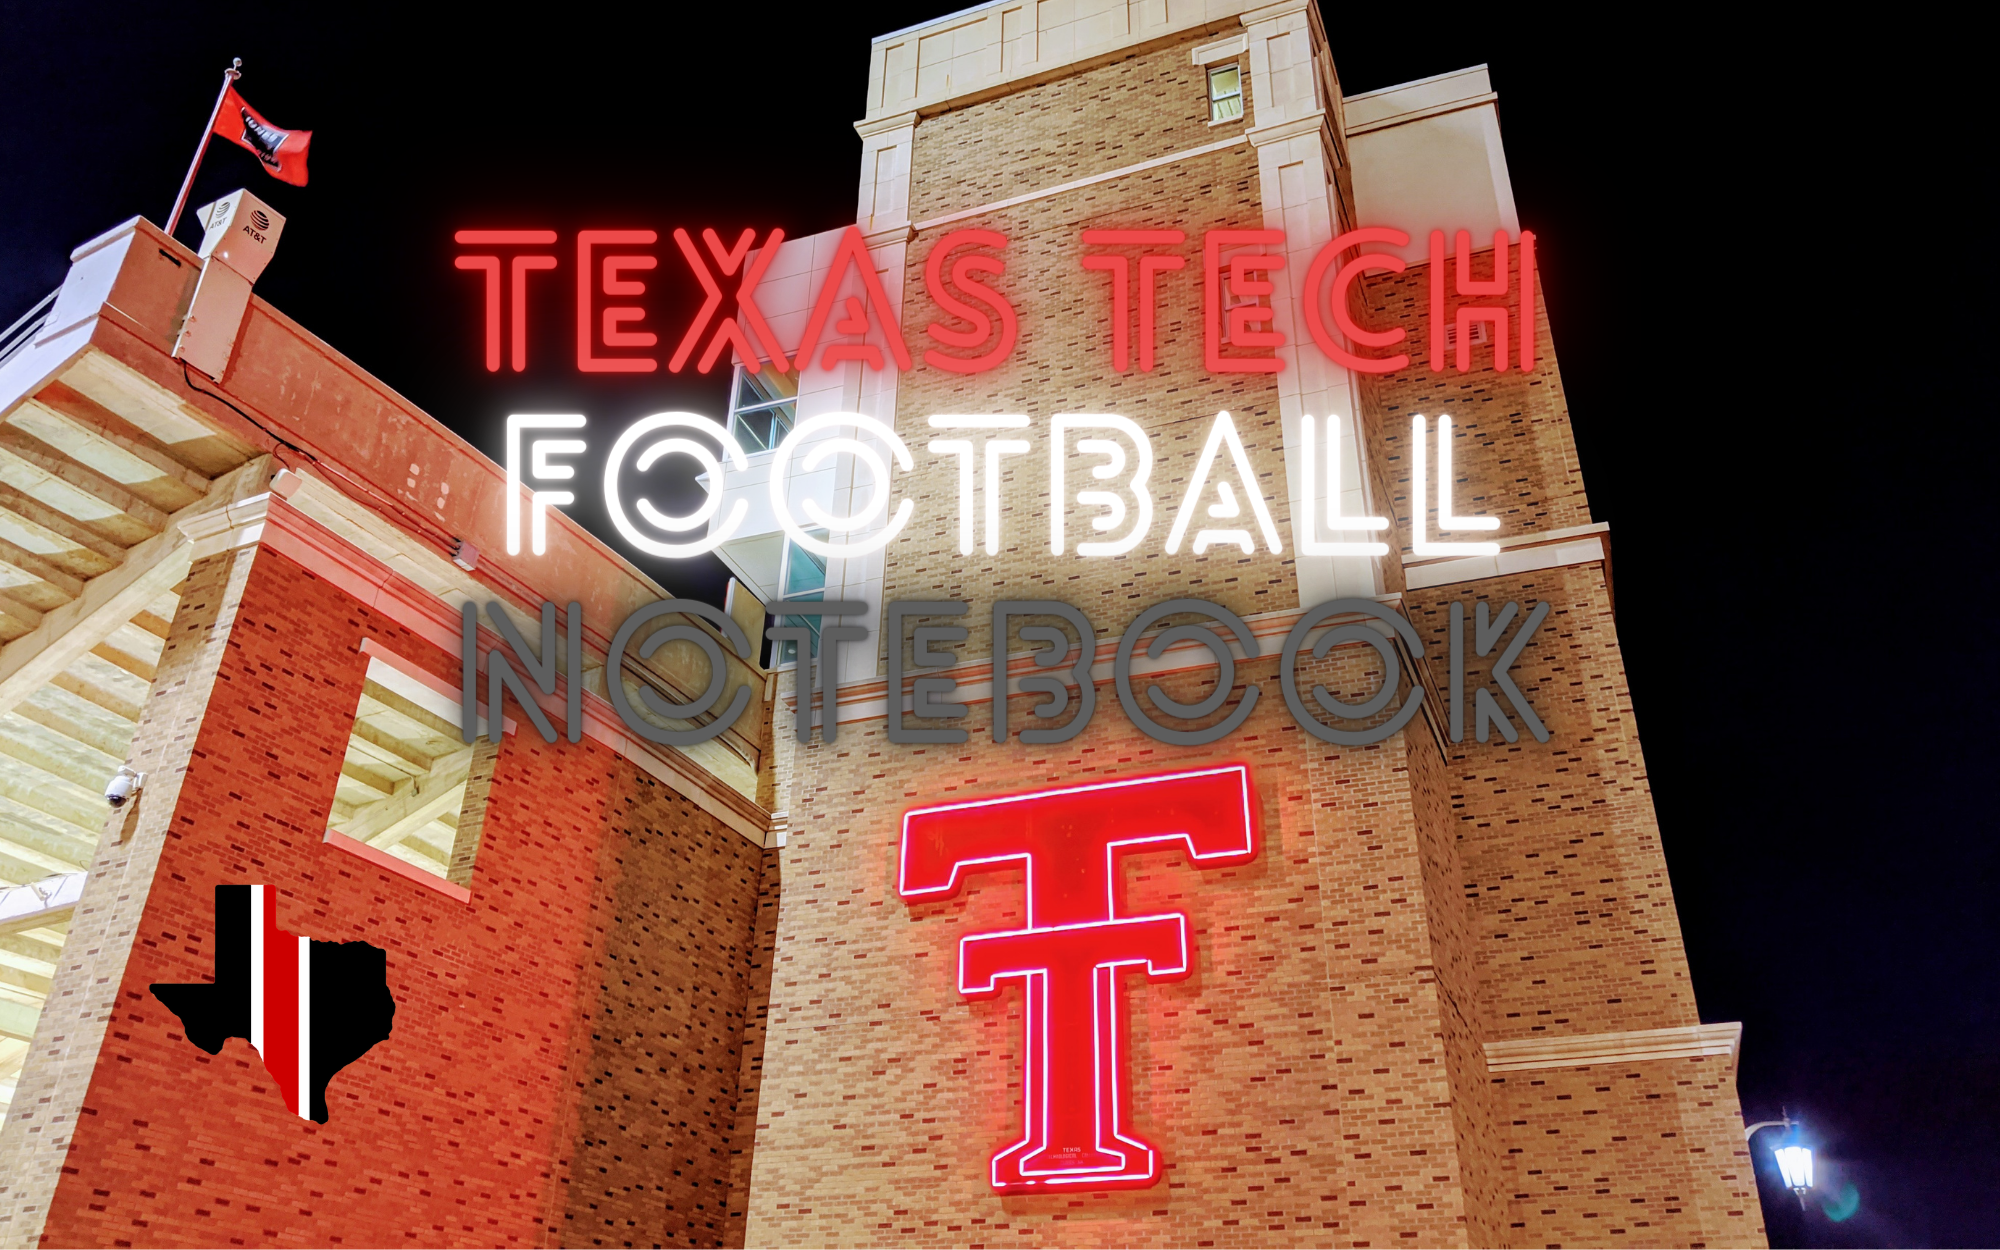 Texas Tech Football Notebook: Oregon Game Day Links